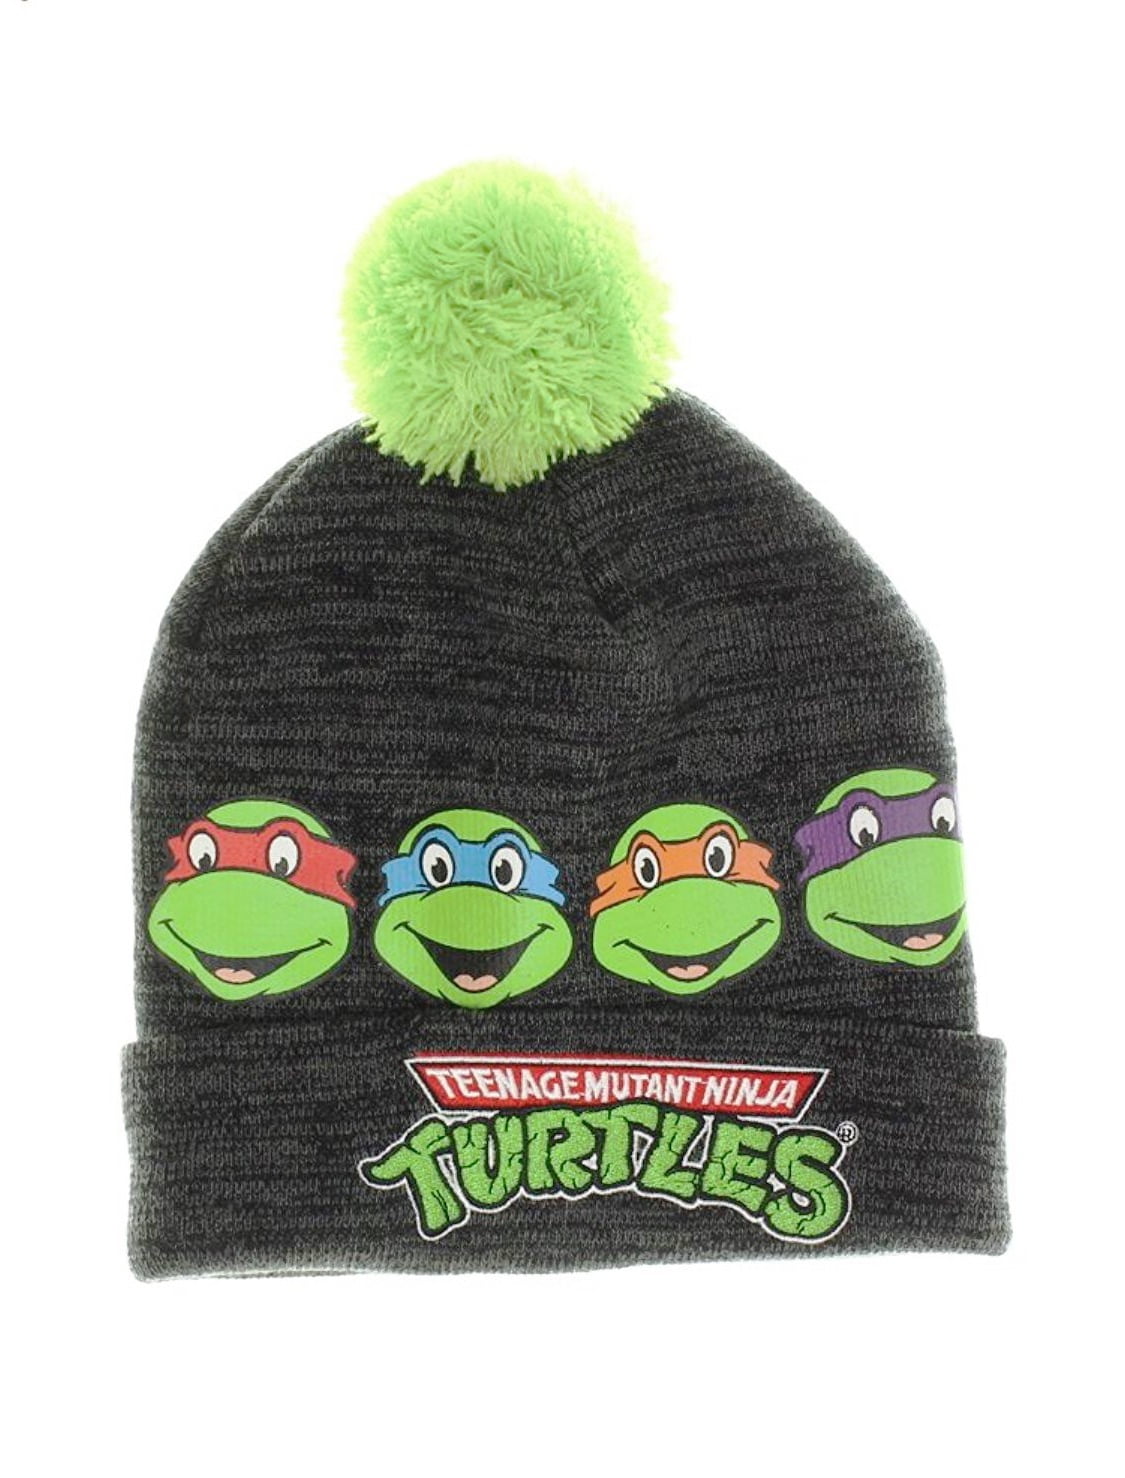 One size Teenage Mutant Ninja Turtles Reversible Beanie Hat 